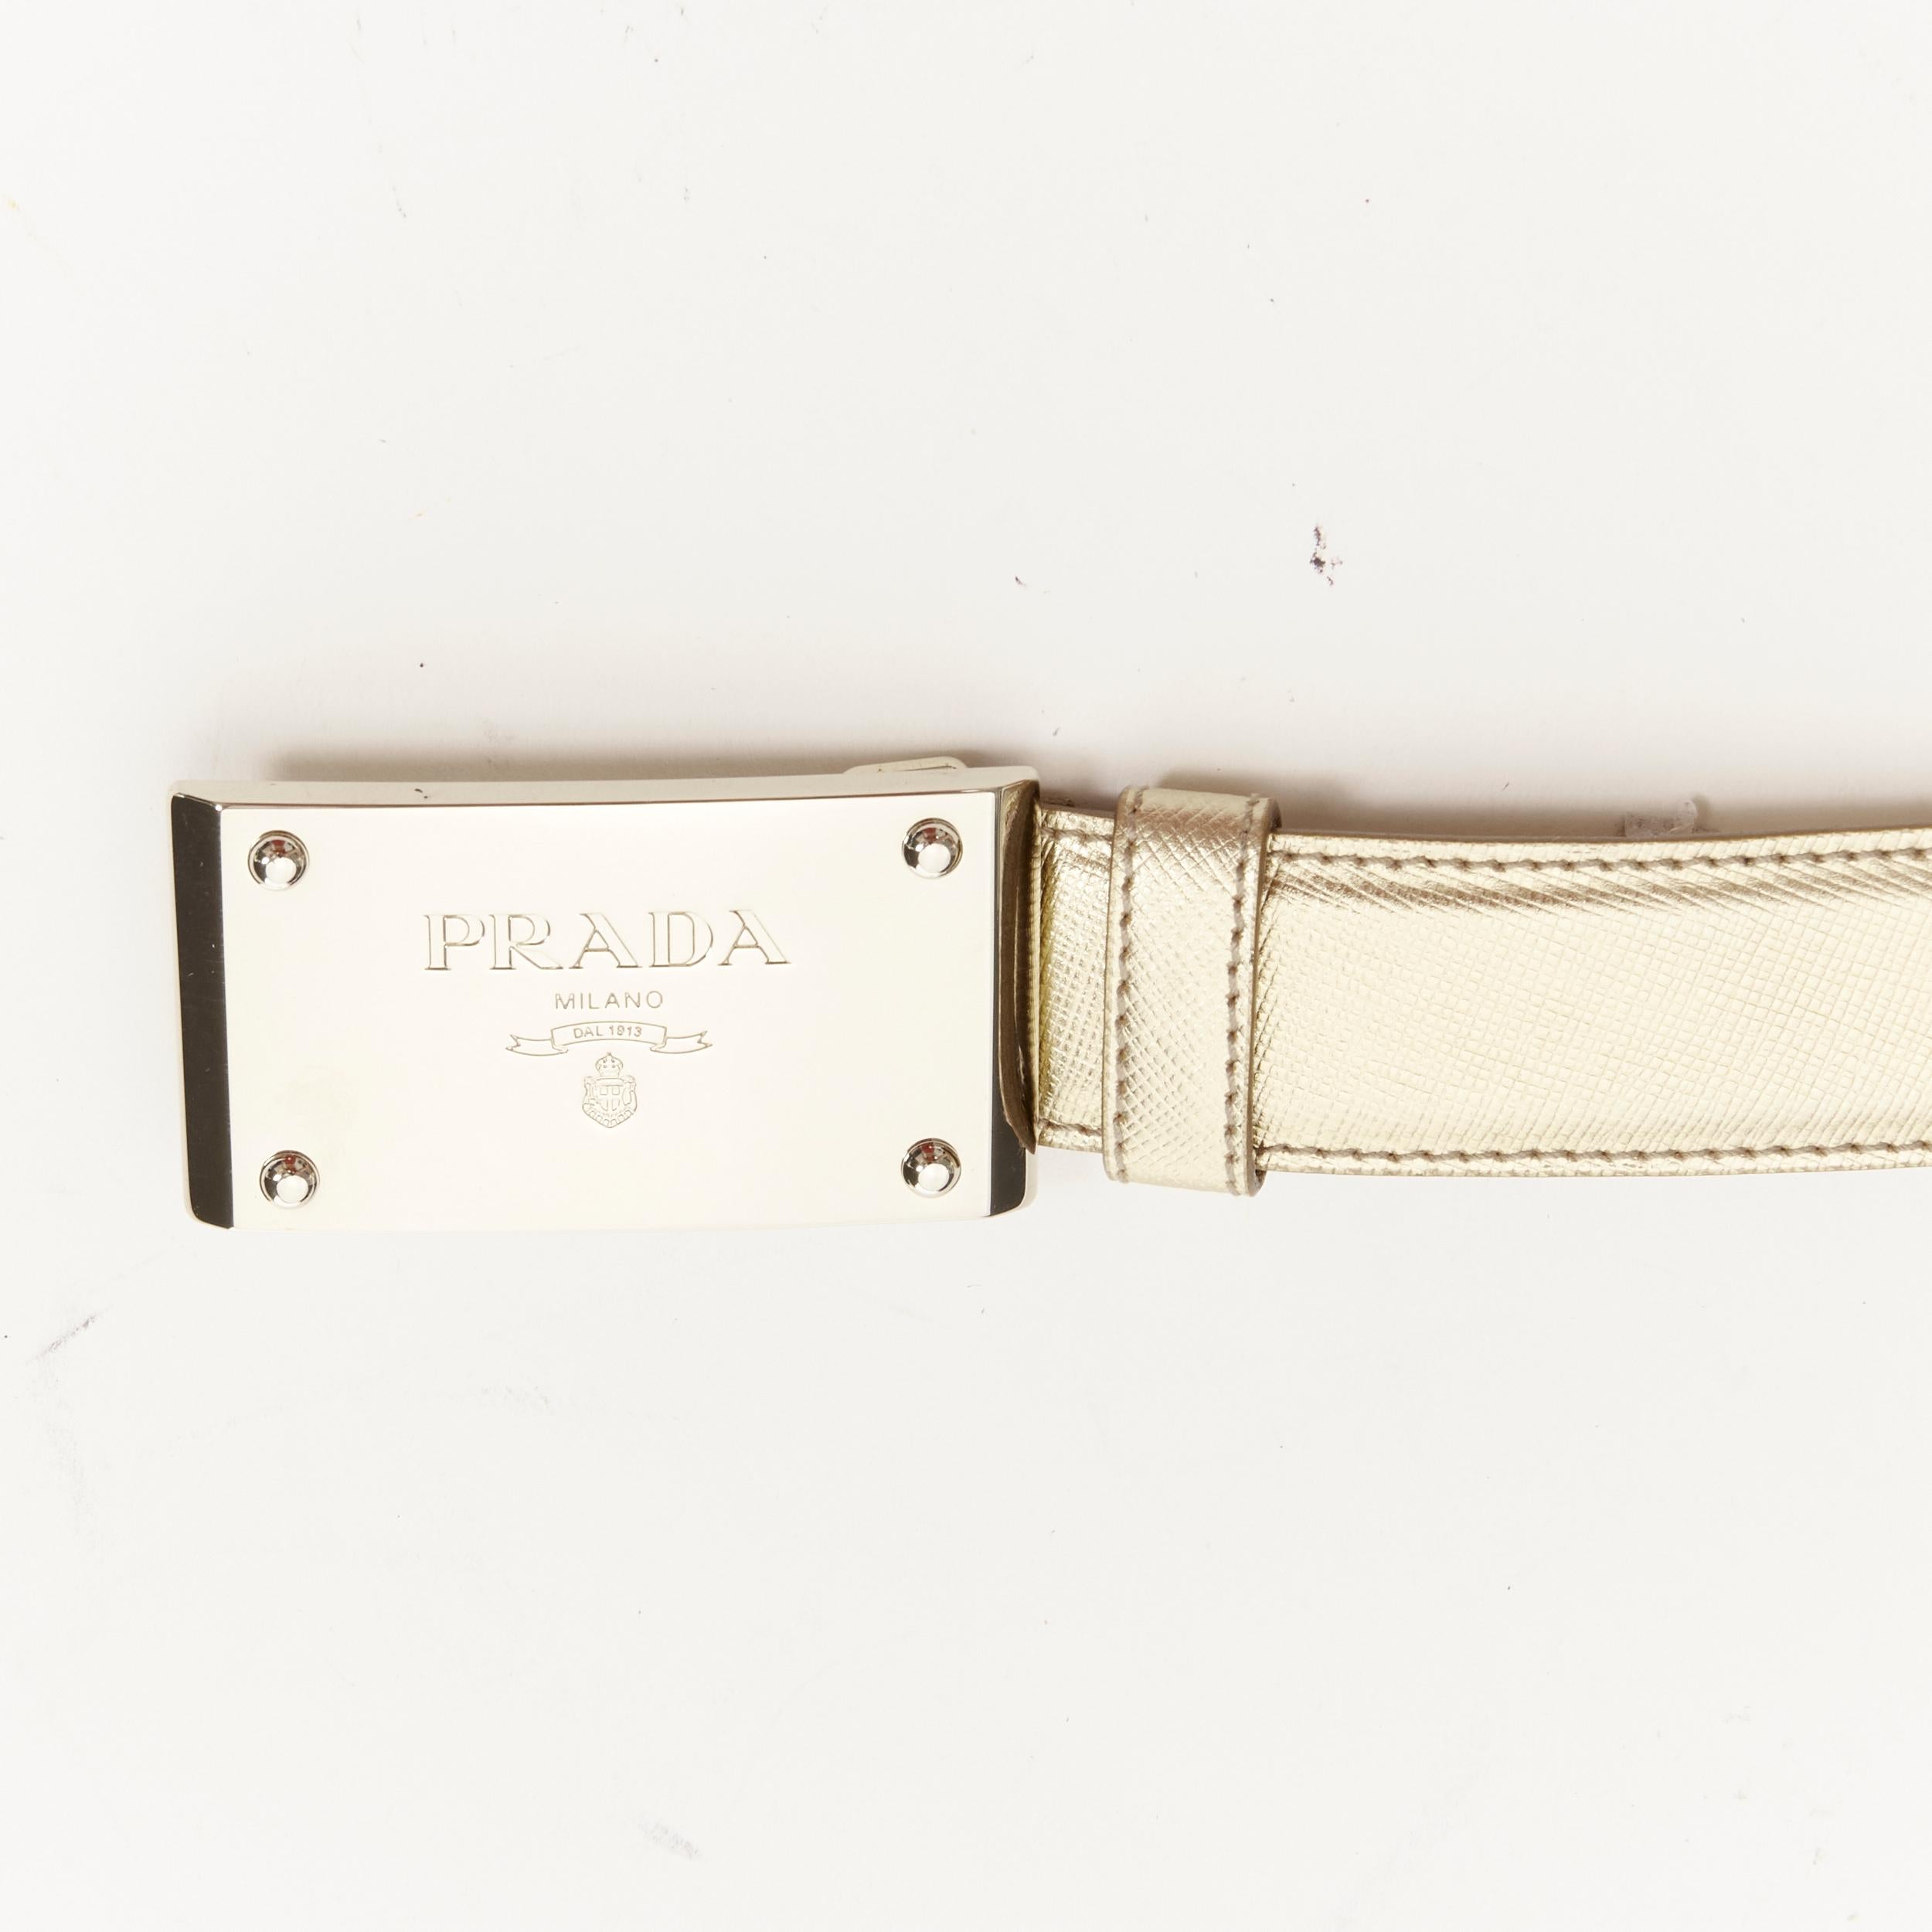 PRADA logo emboss metal buckle champagne gold saffiano leather belt 90cm 36